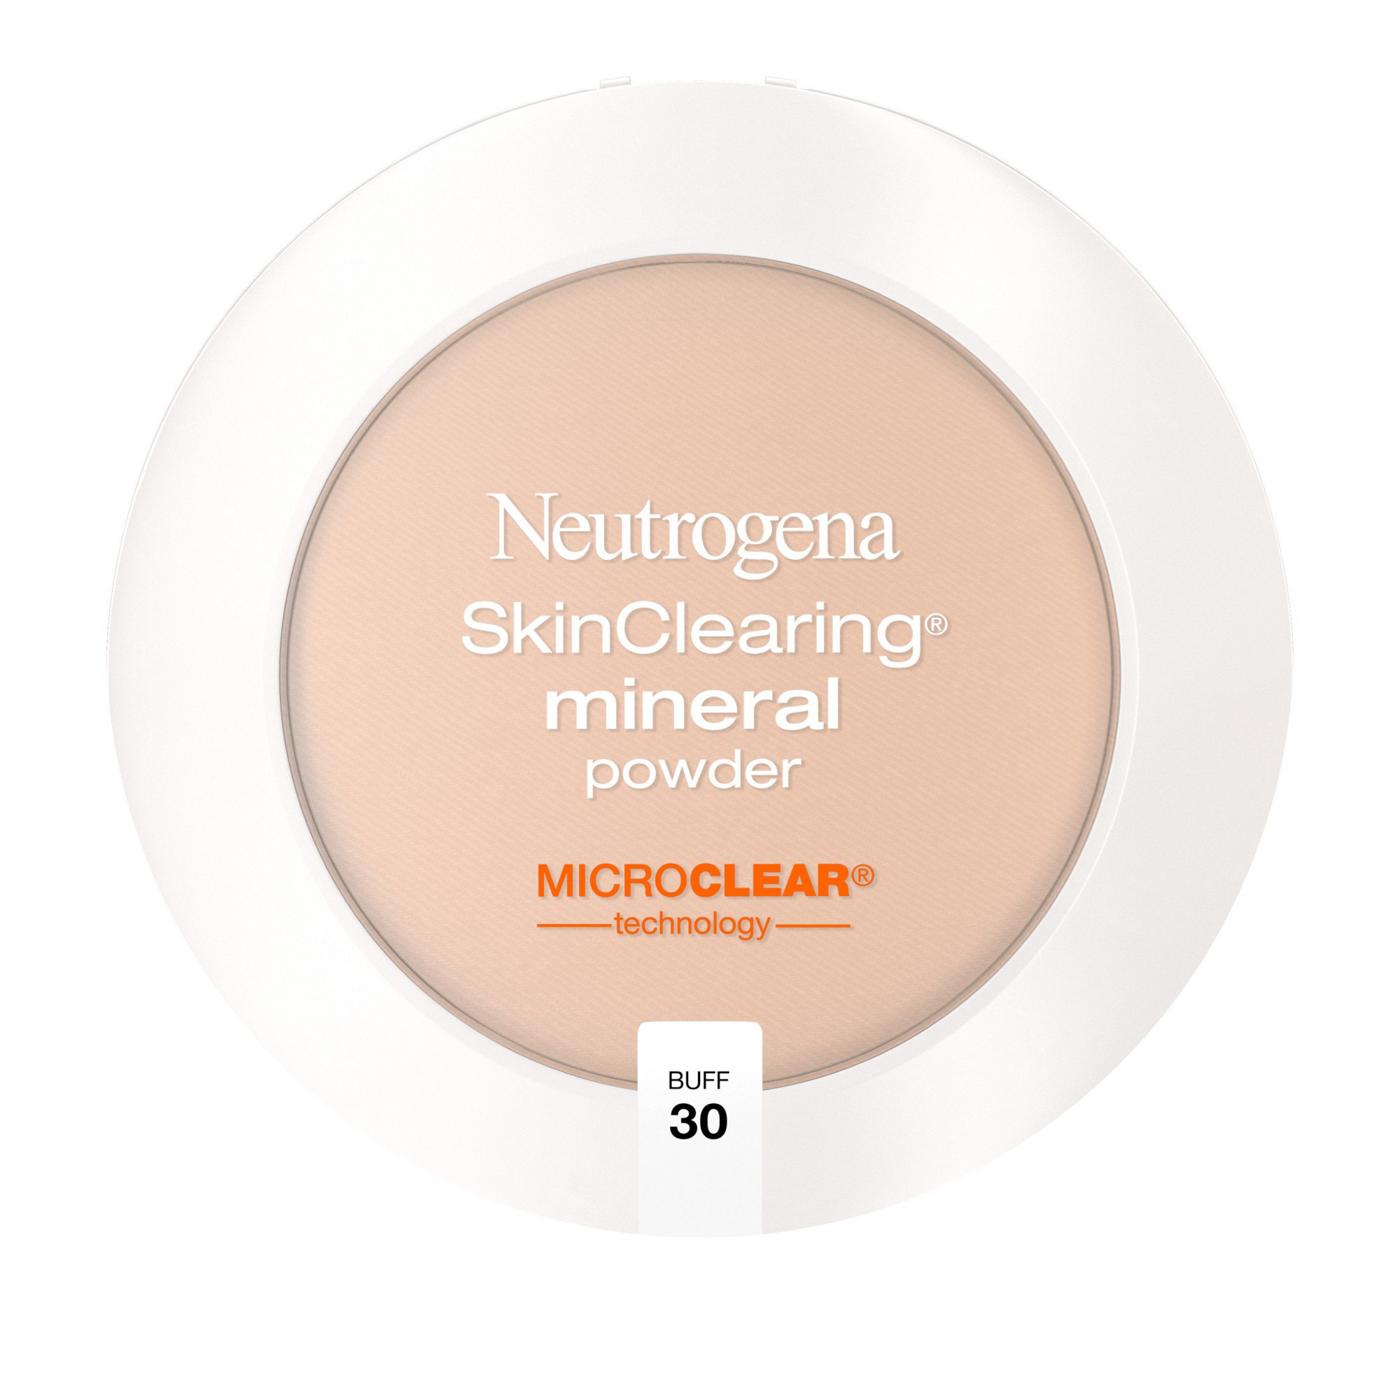 Neutrogena Skinclearing Mineral Powder 30 Buff; image 1 of 5